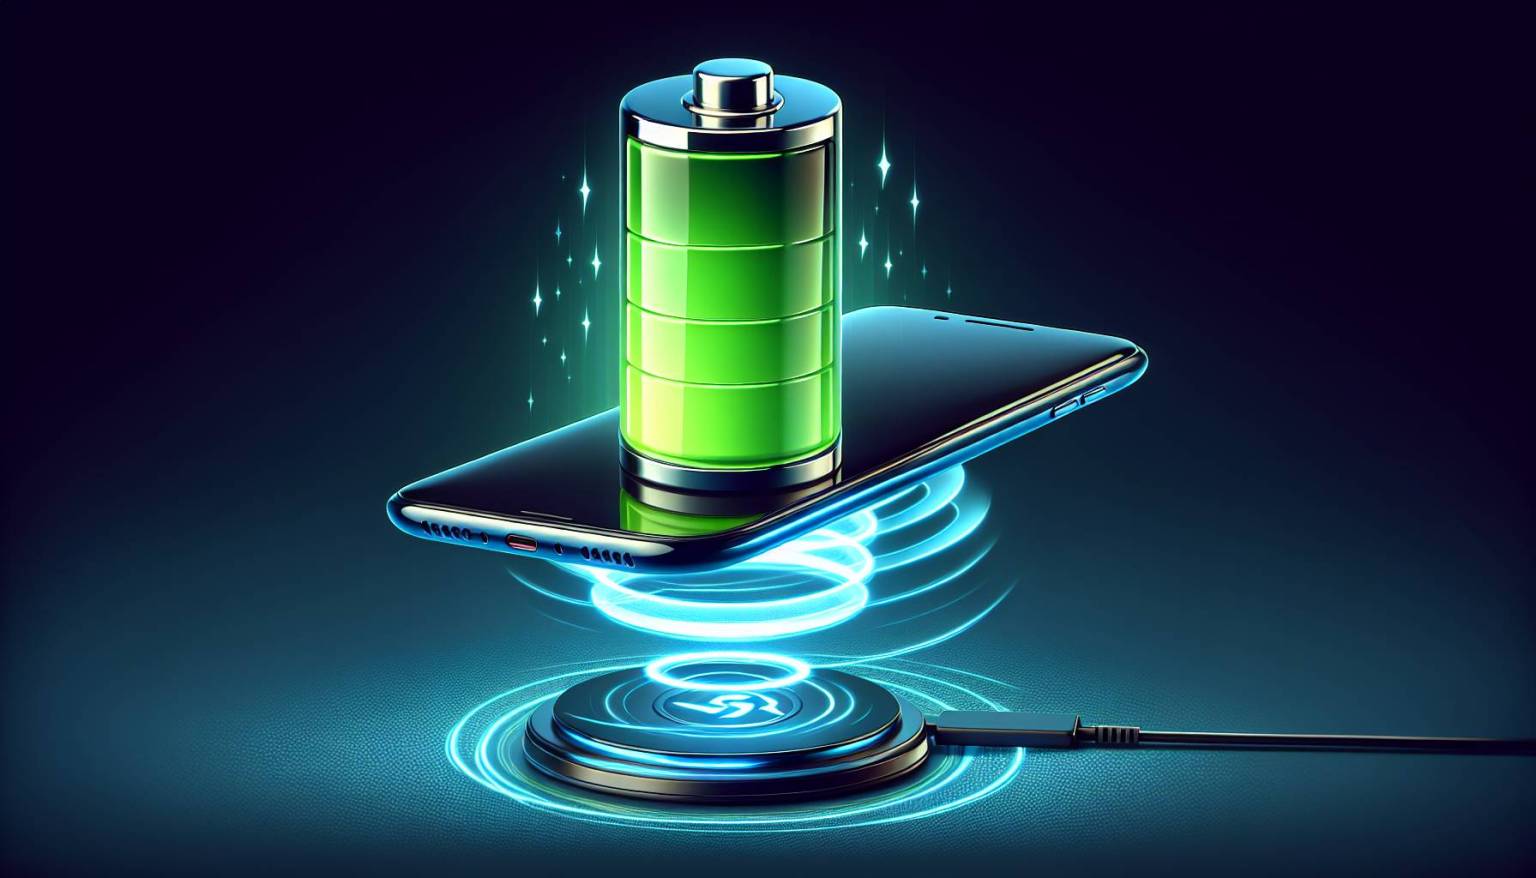 "OnePlus Battery"